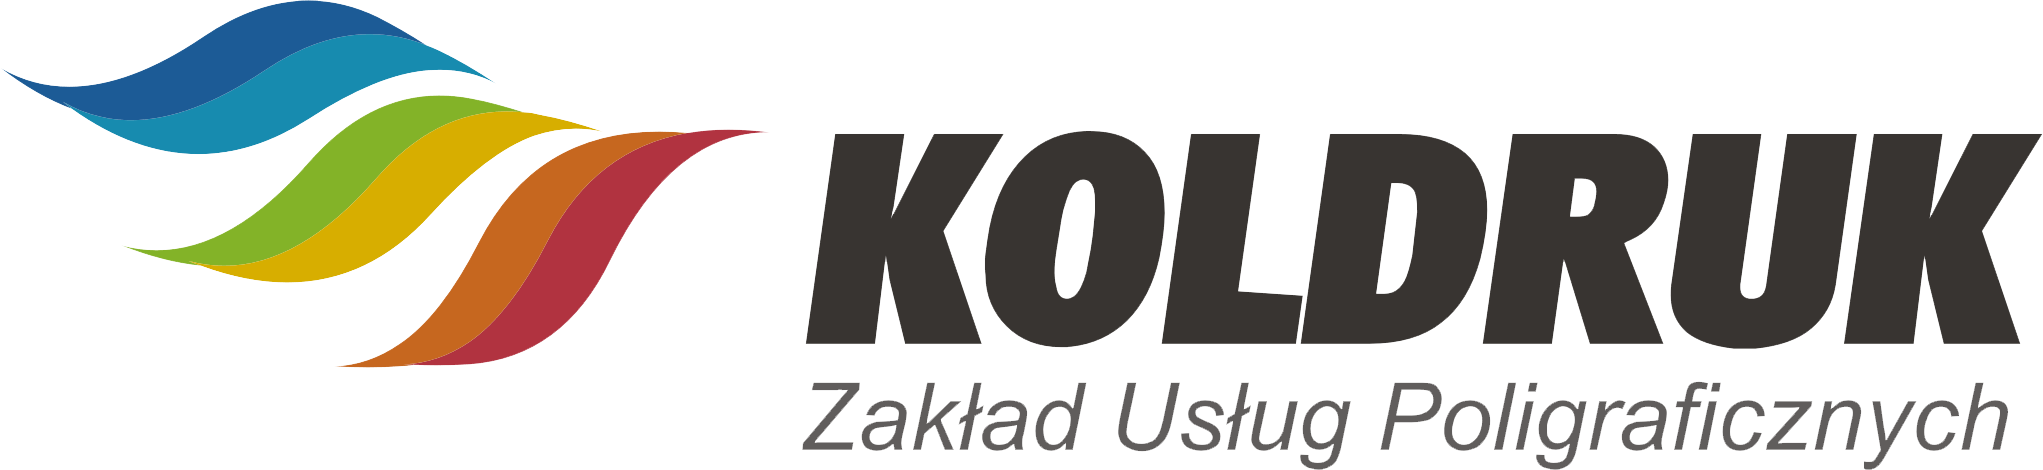 KOLDRUK_logo